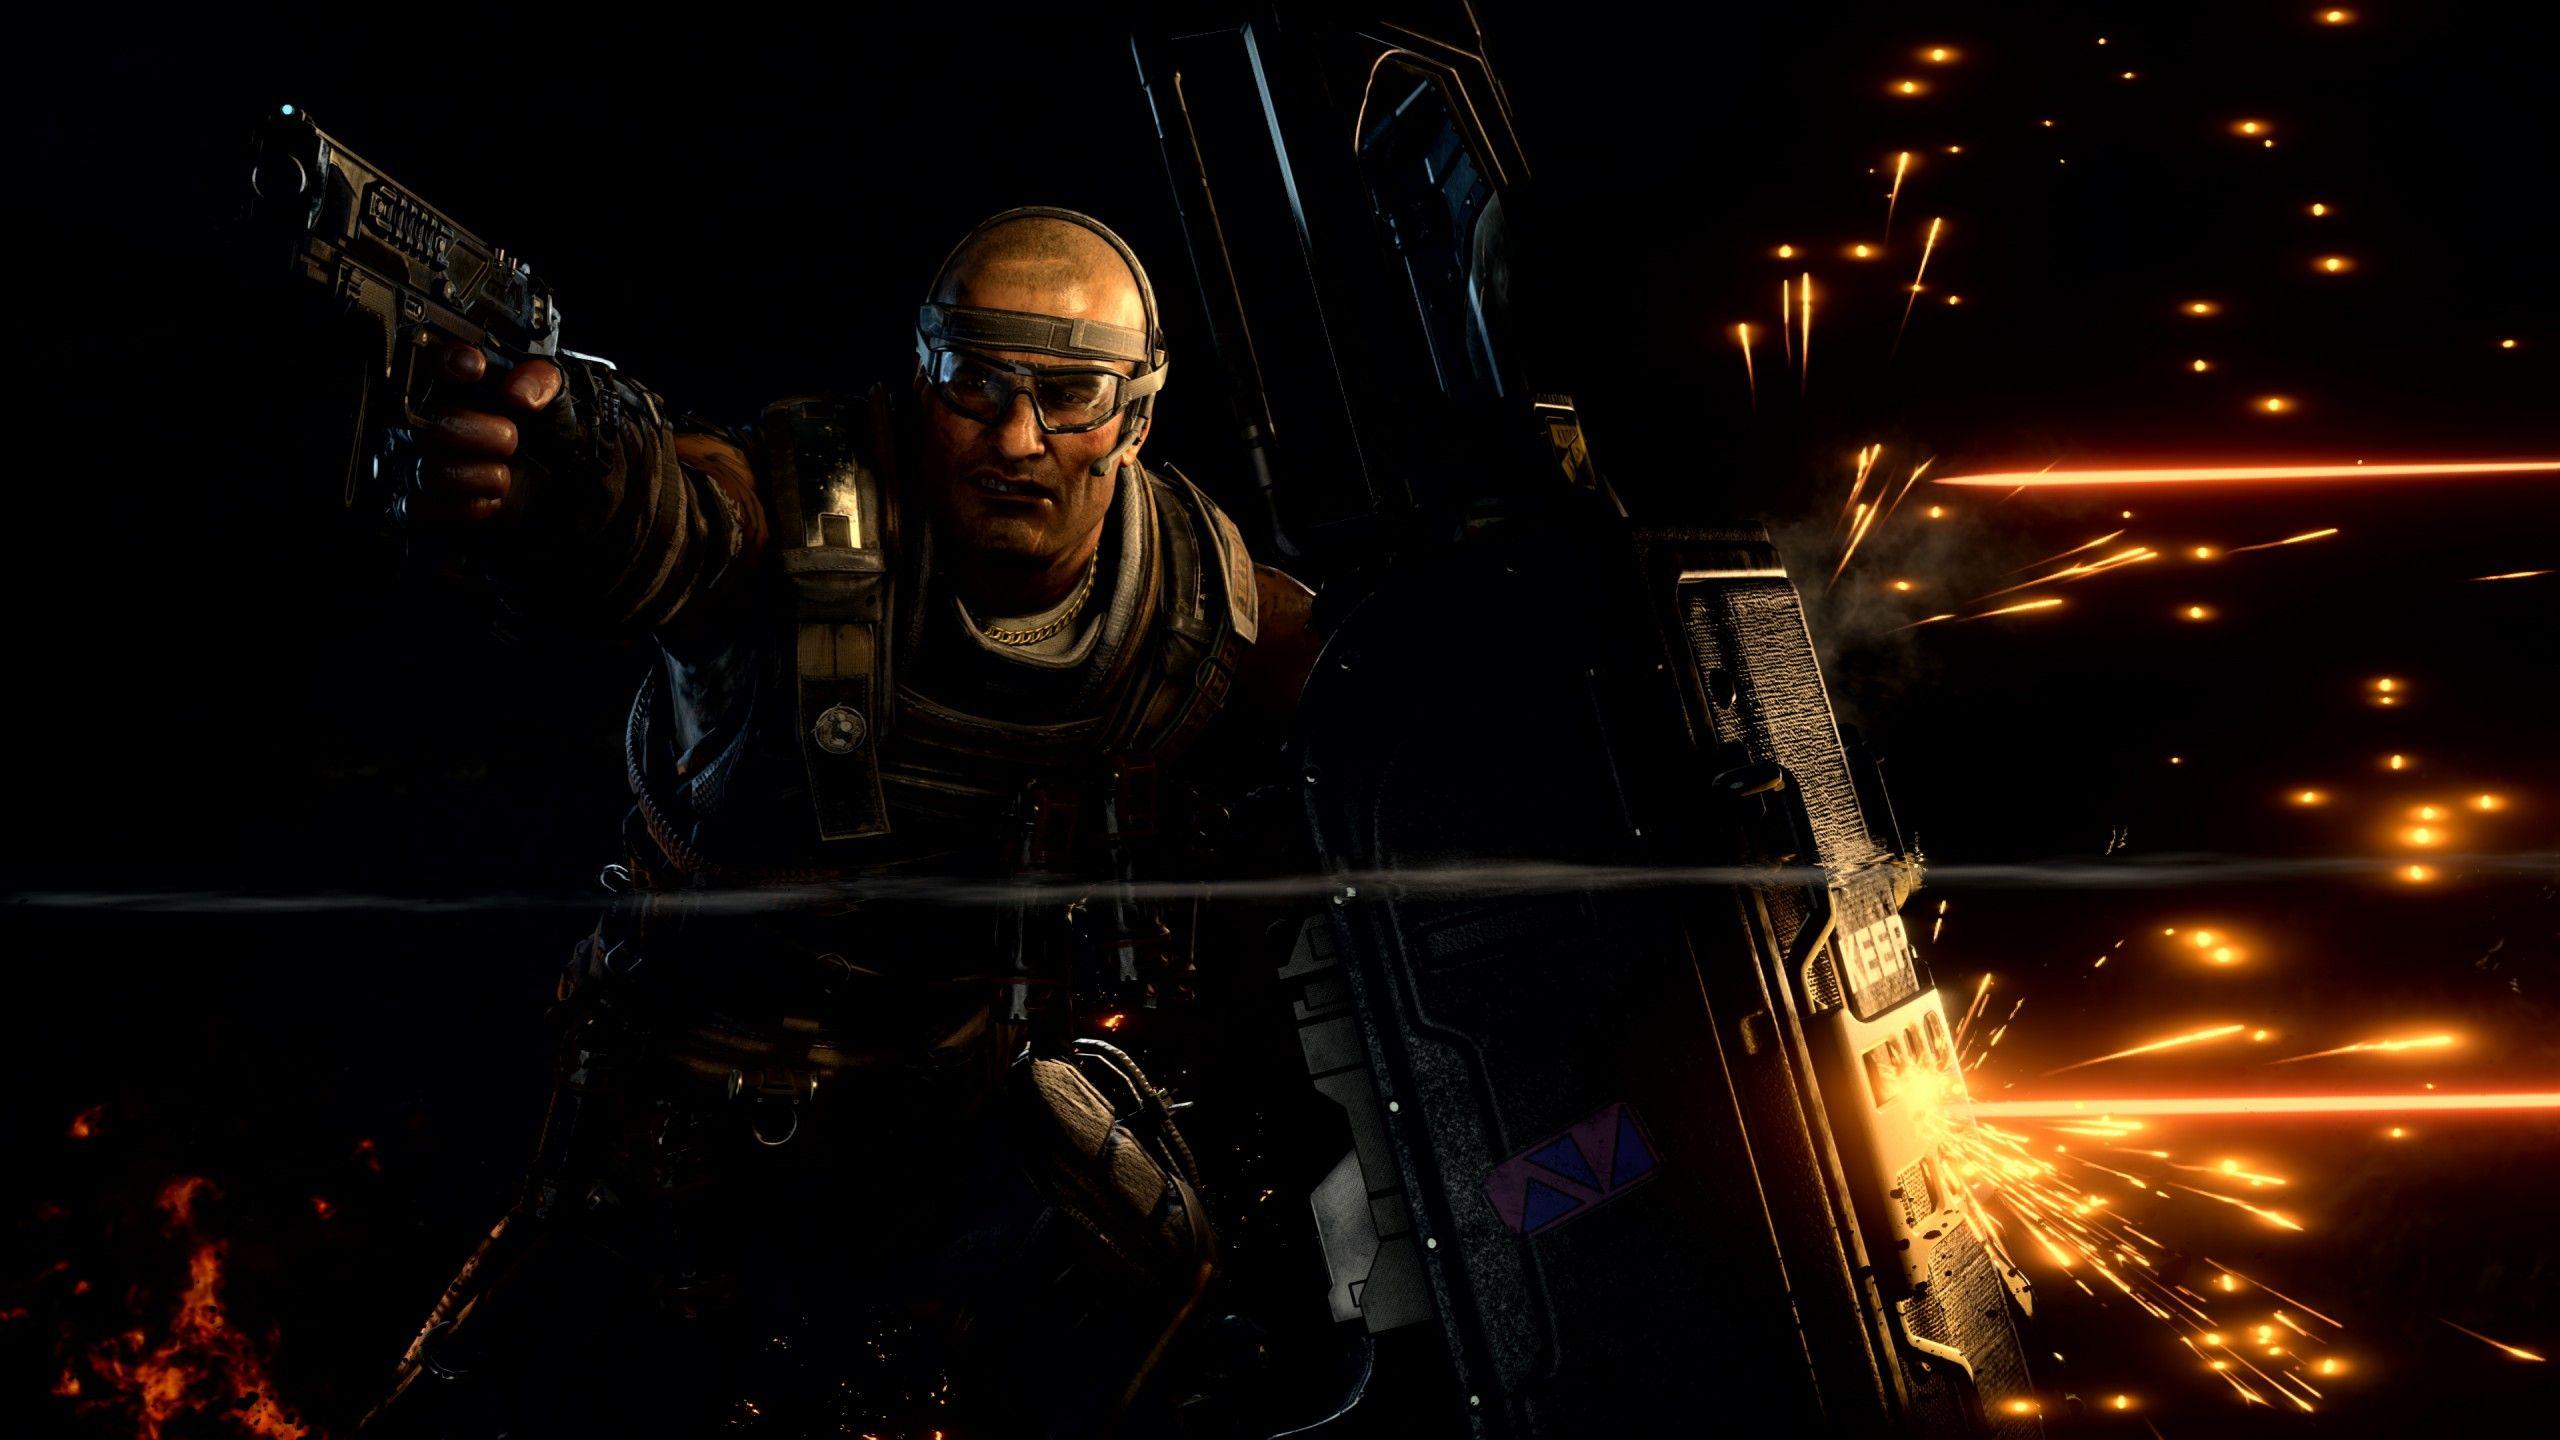 Wallpaper Call of Duty Black Ops screenshot, 4K, Games